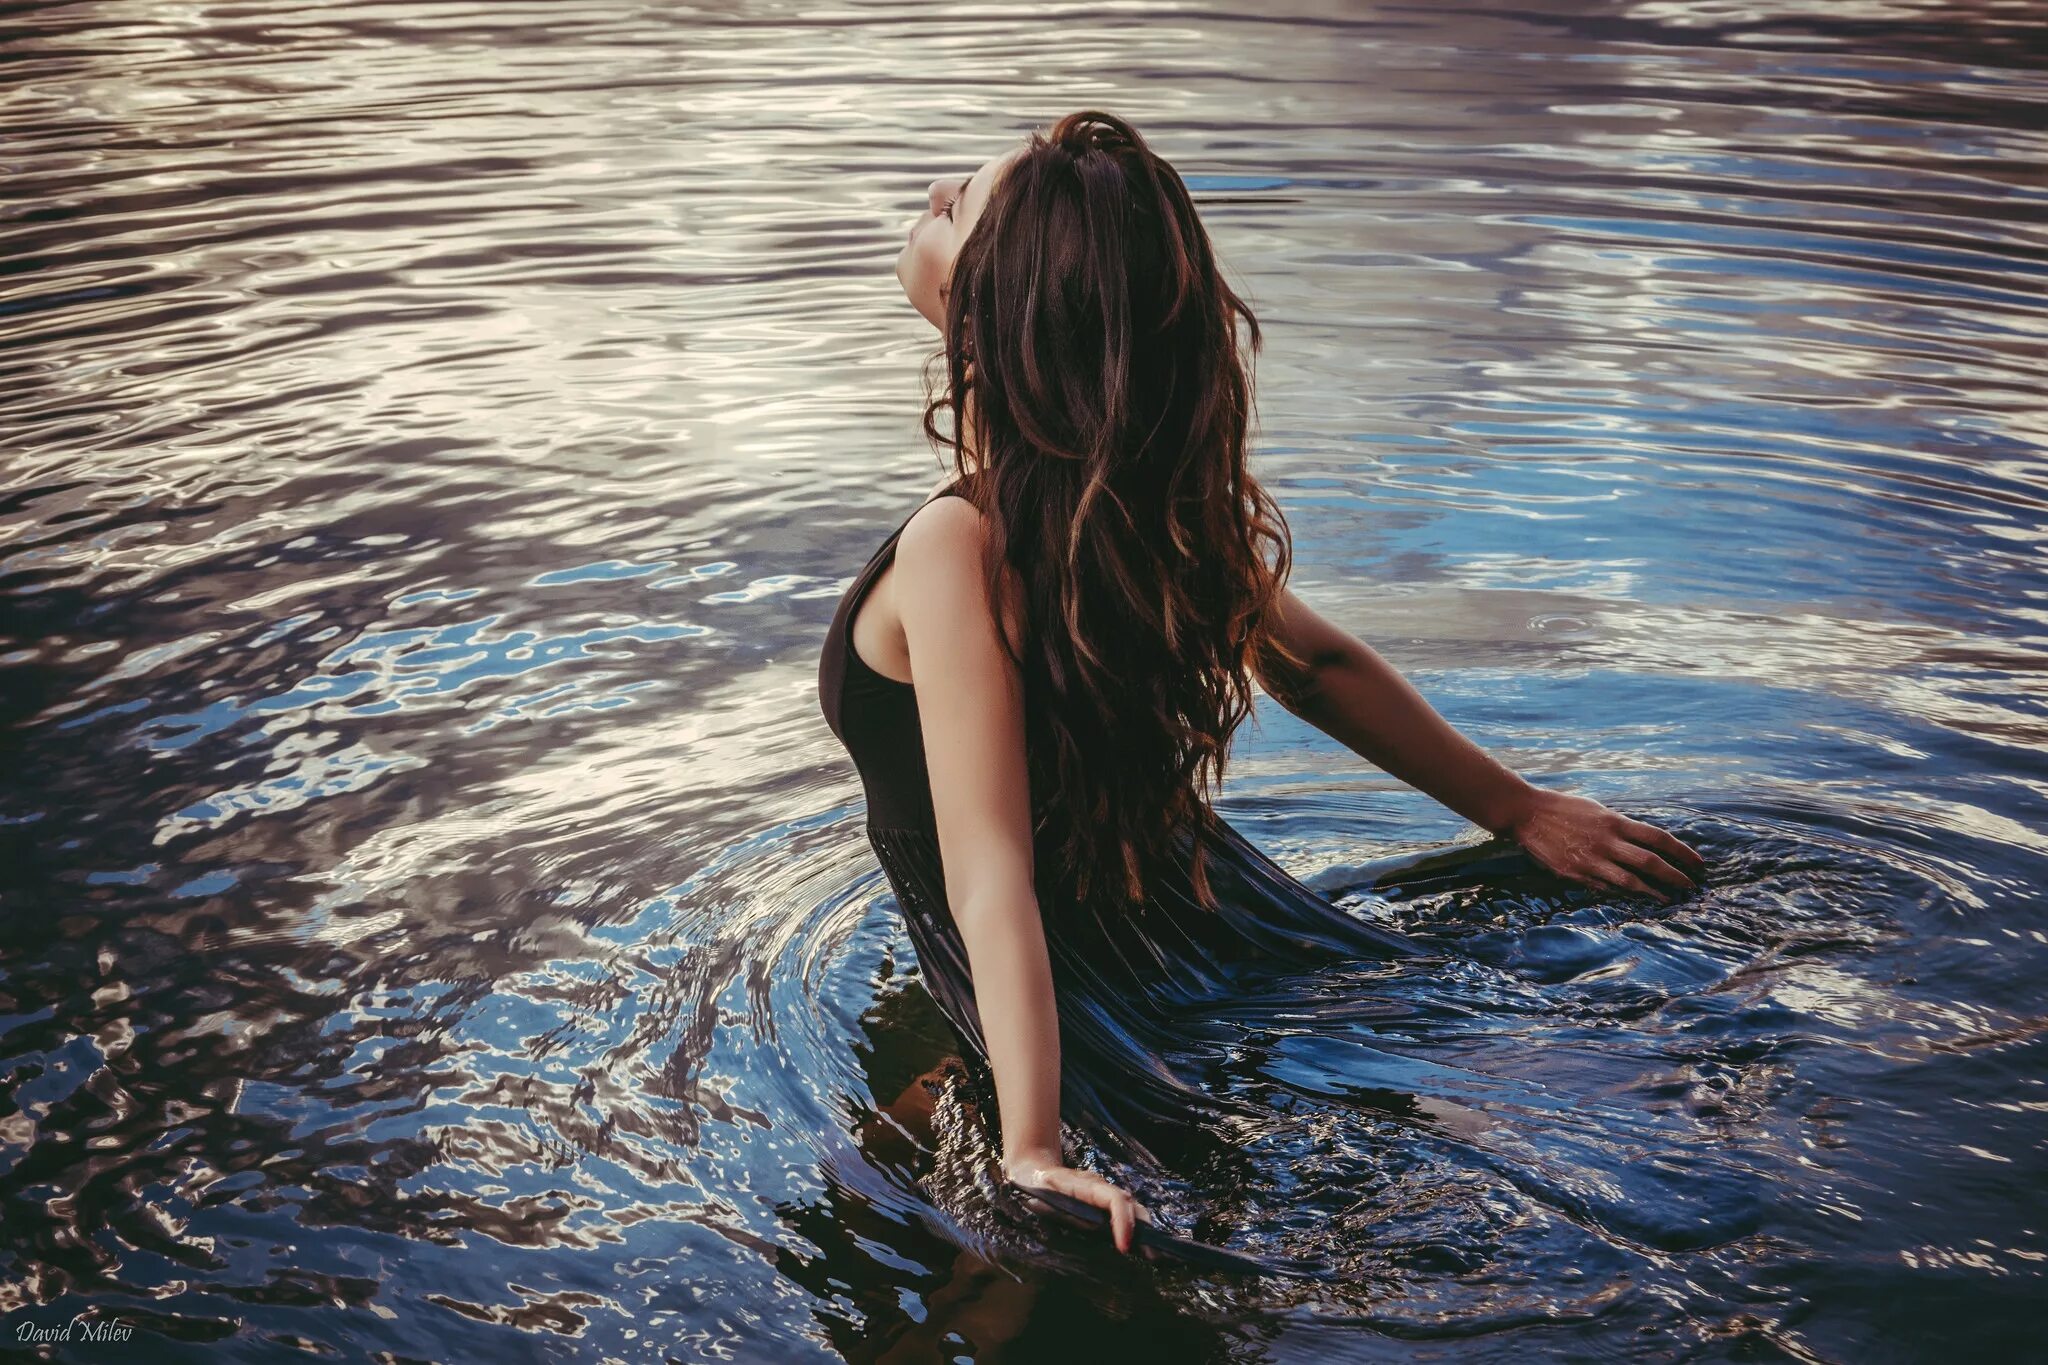 Lake girl. Фотосессия в воде. Фотосессия в воде в платье. Девушка в воде. Девушка у реки.